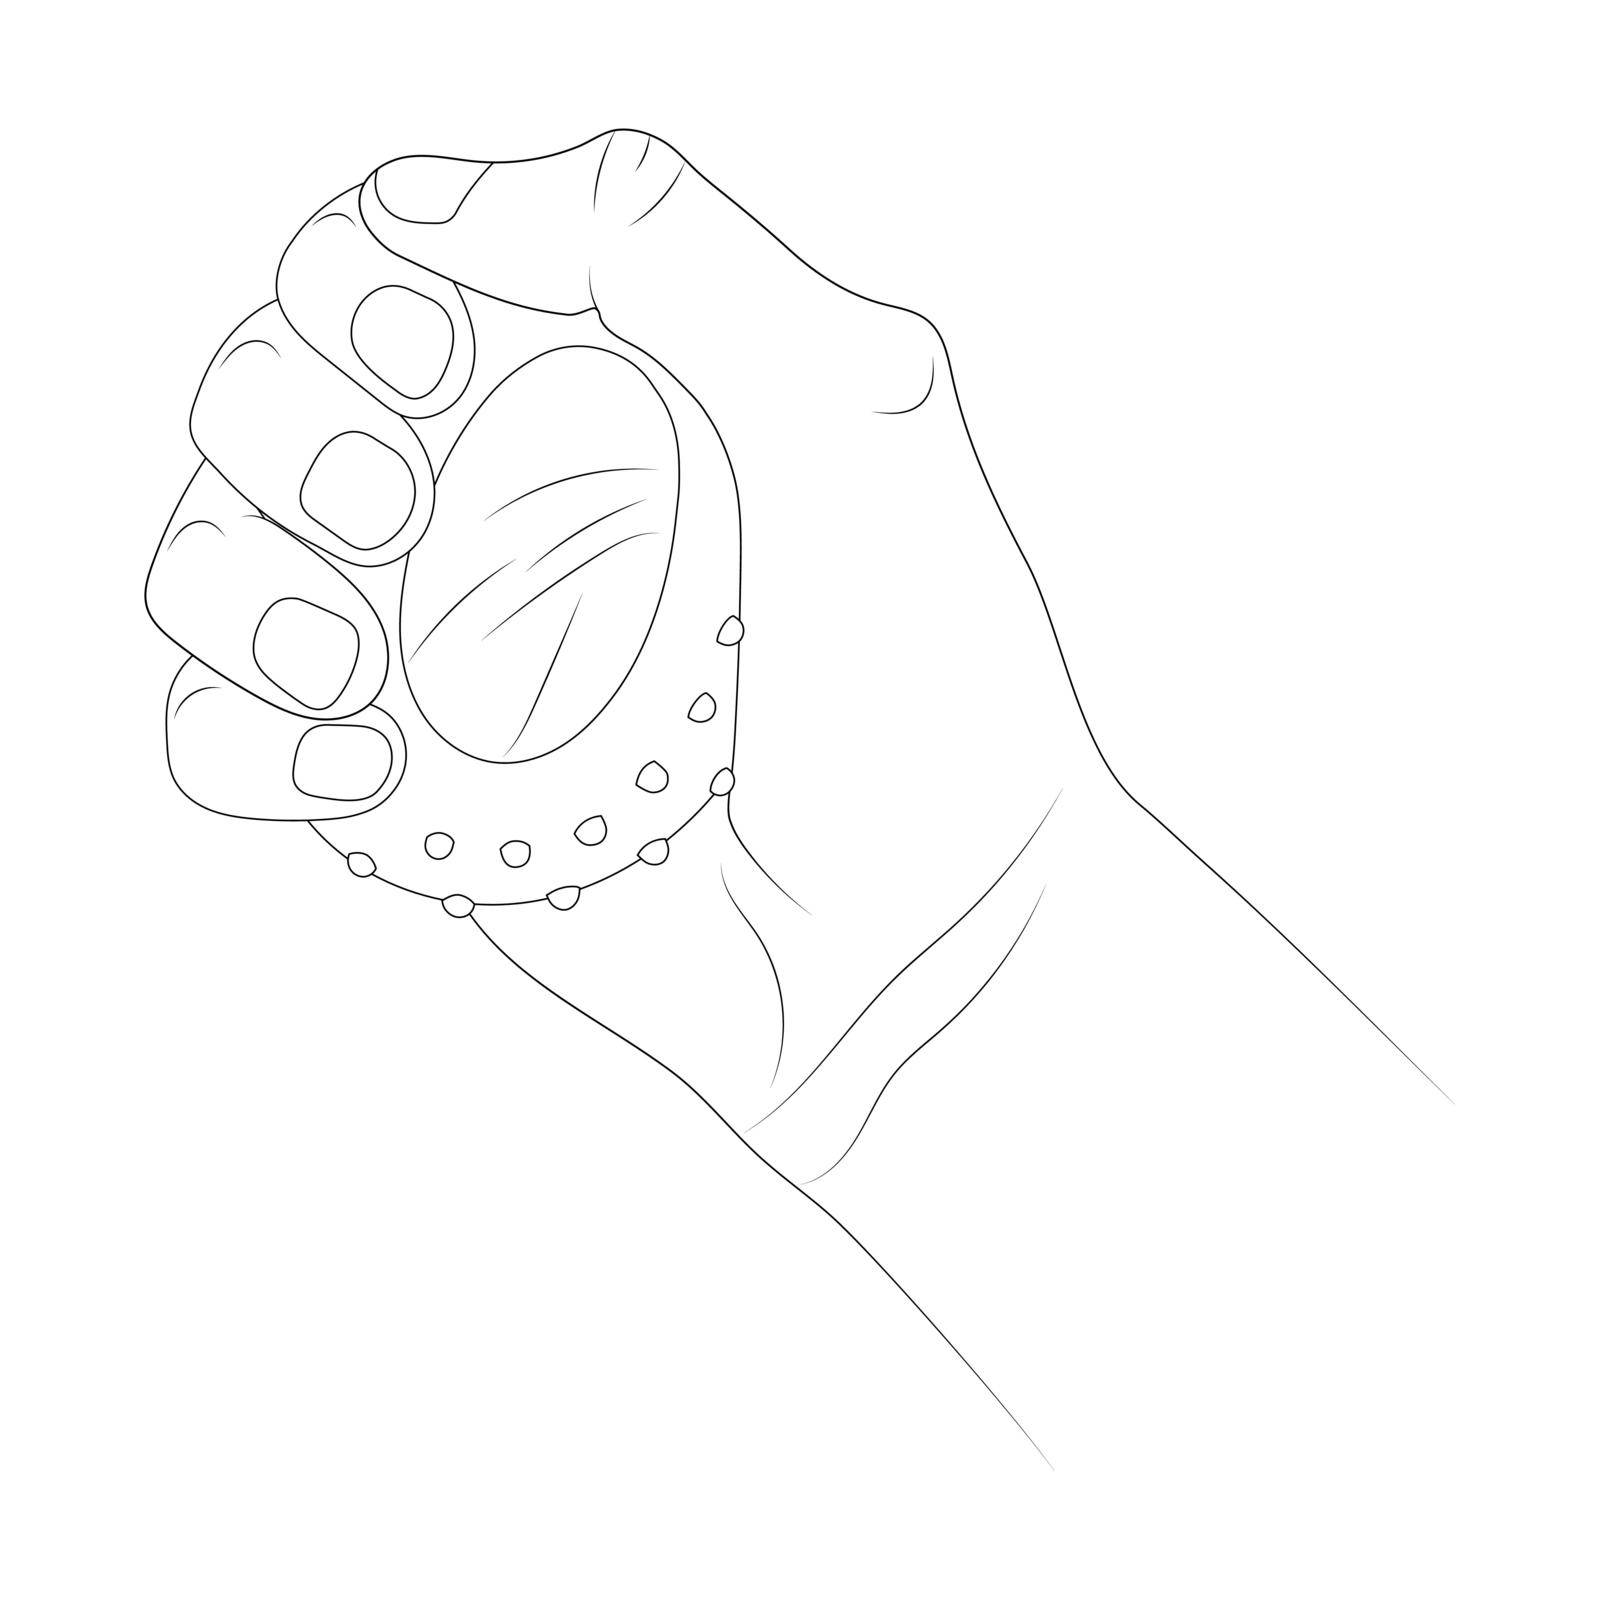 Hand grip strengthener. Fitness expander. by vas_evg